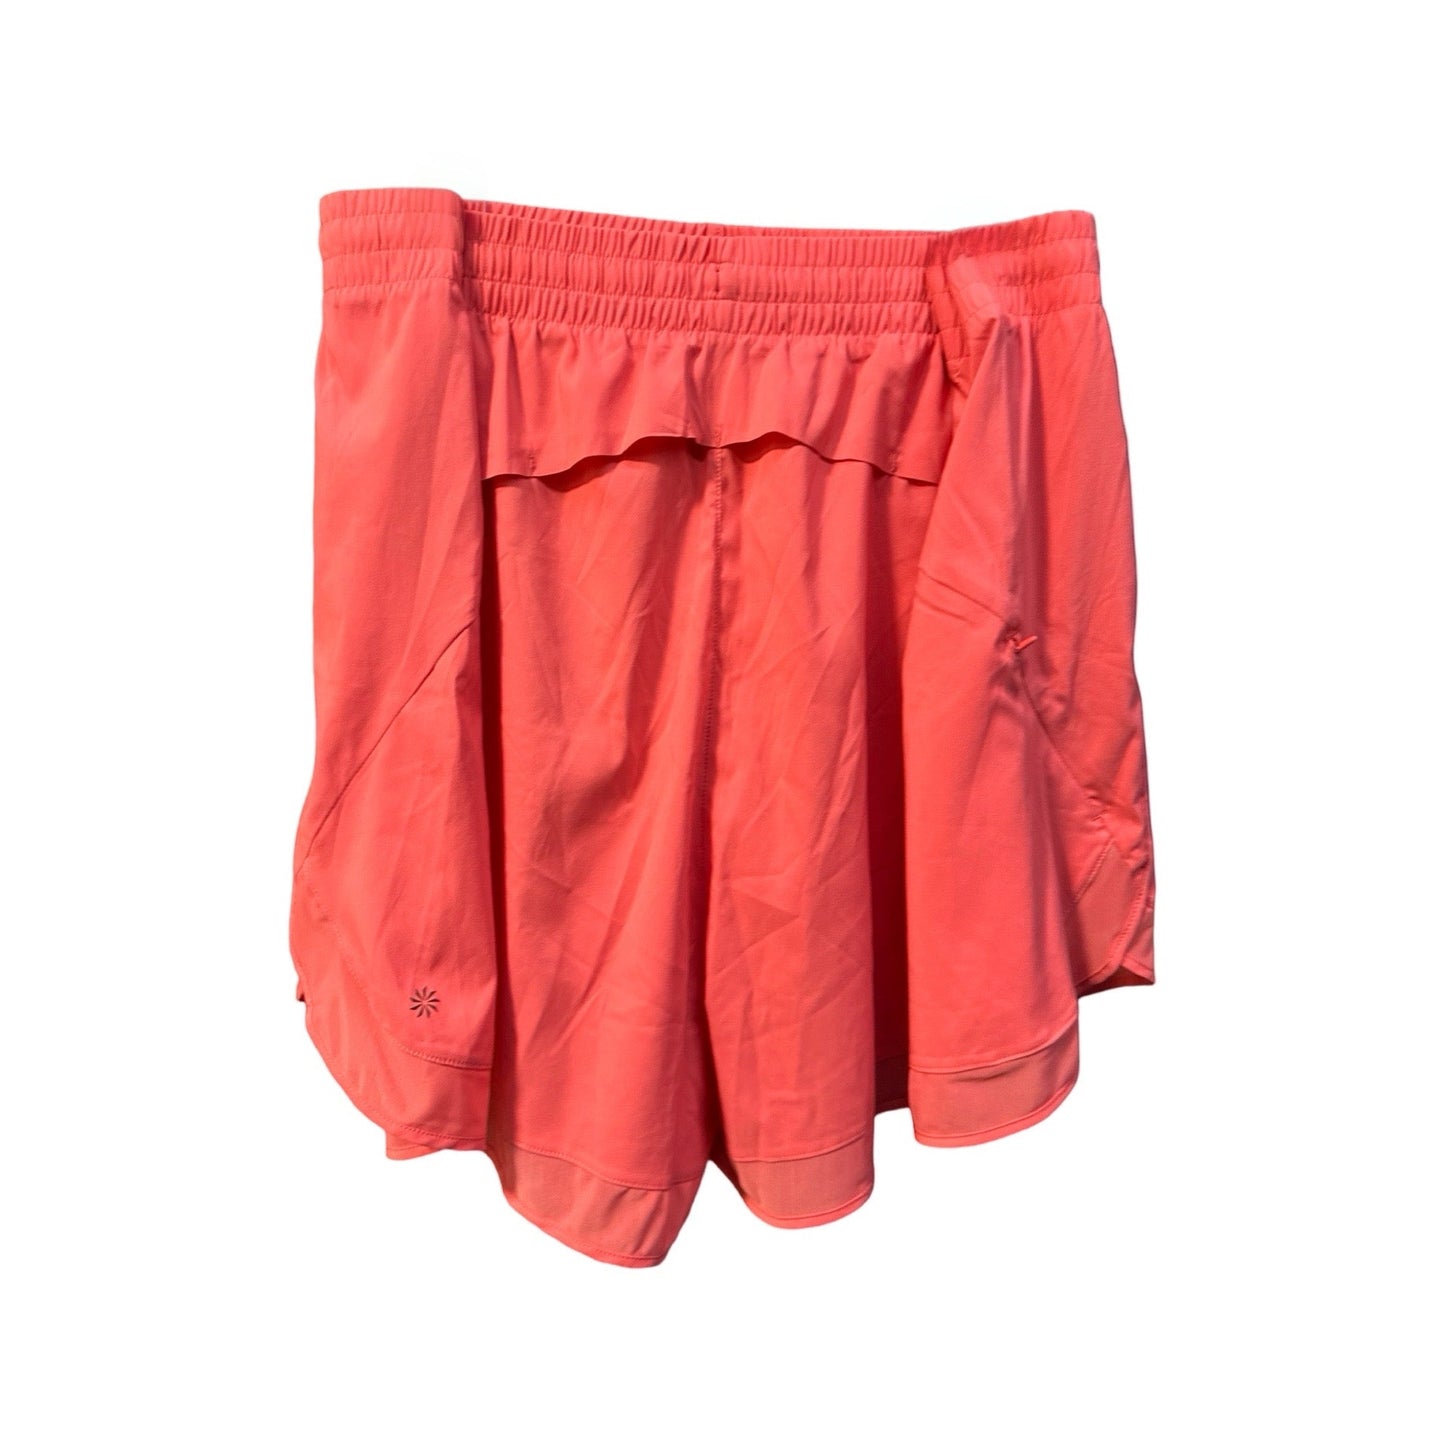 Coral Shorts Athleta, Size 3x